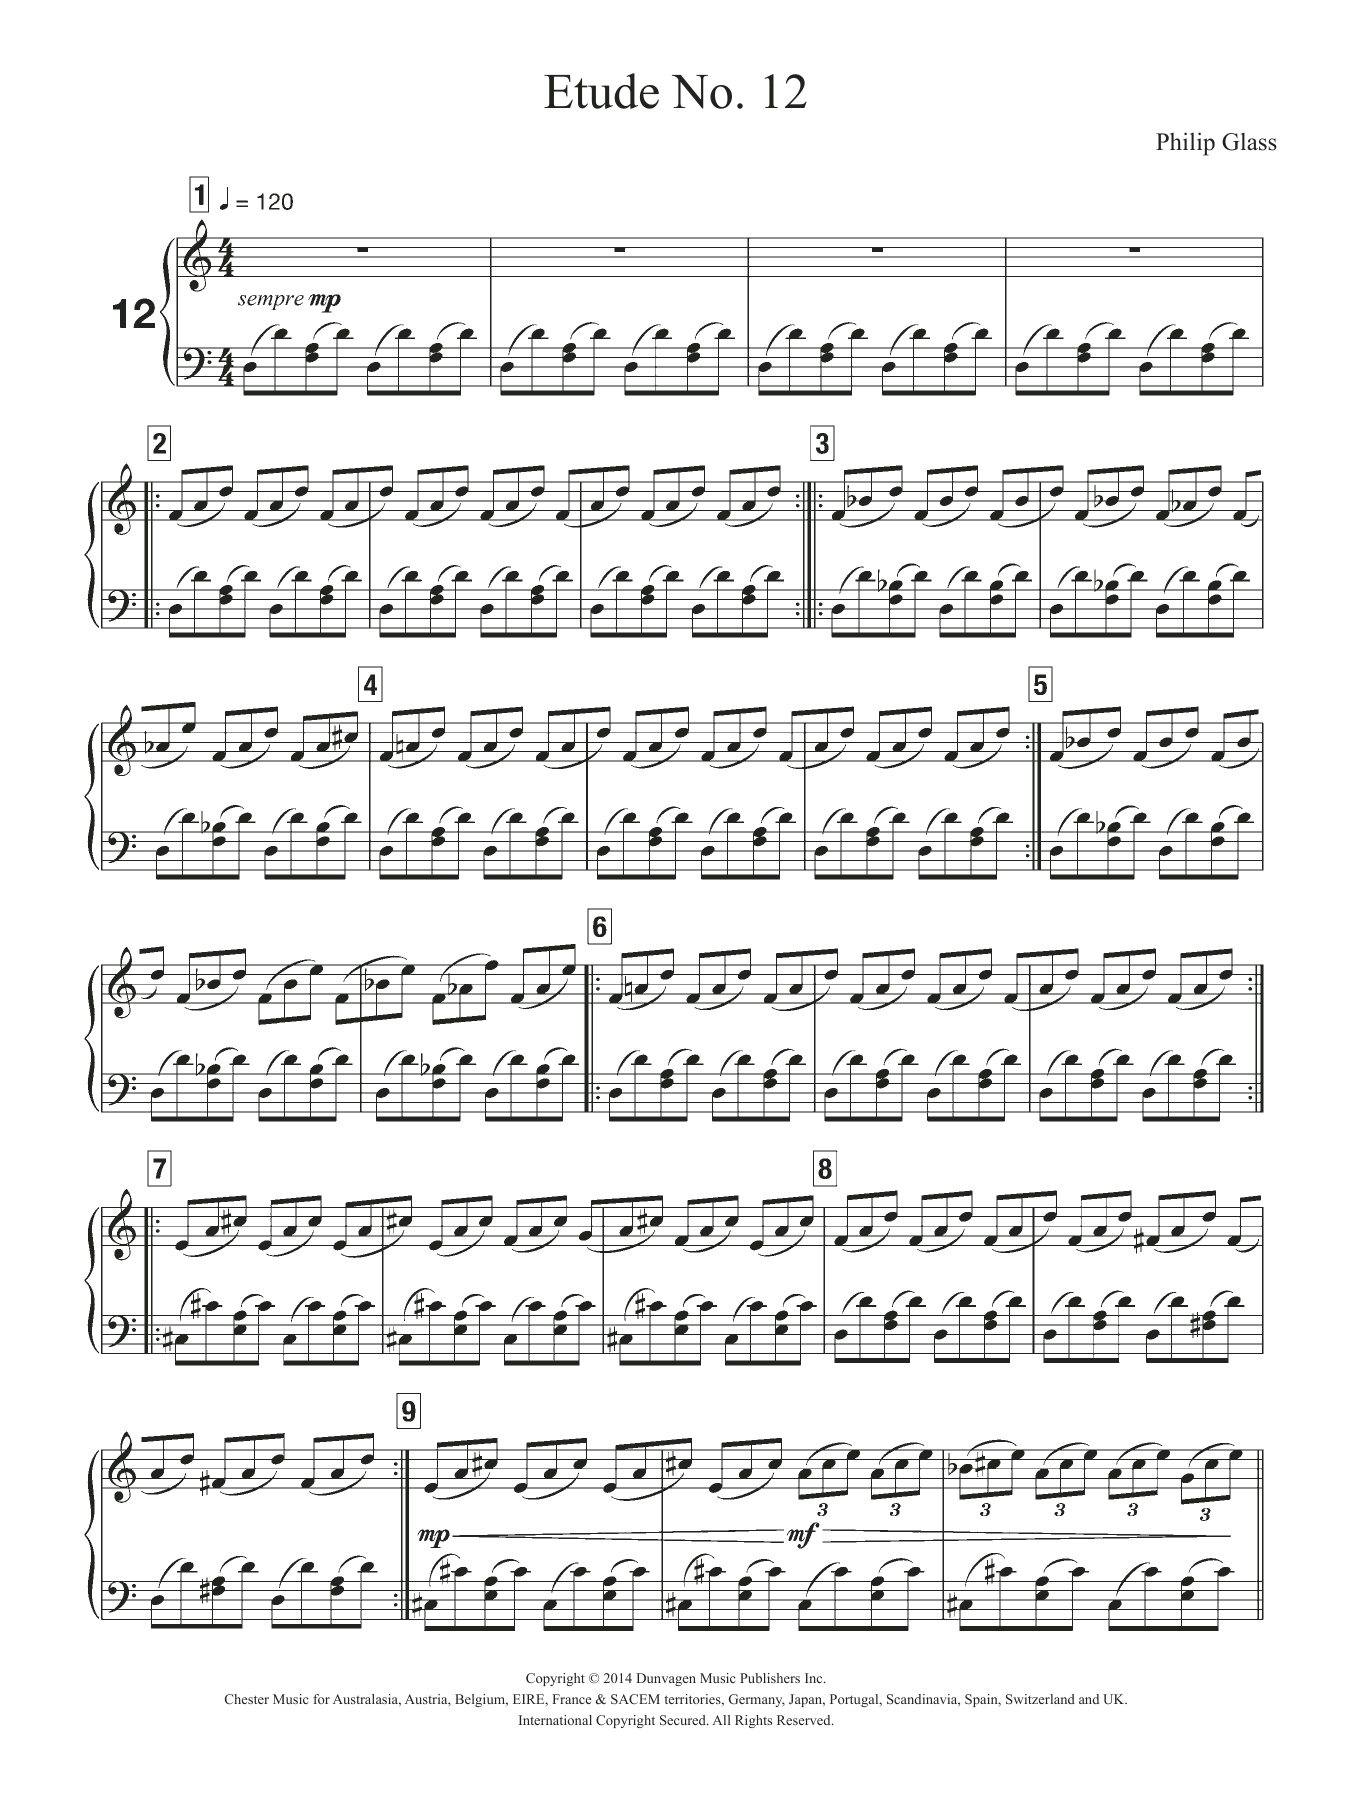 Download Philip Glass Etude No. 12 Sheet Music